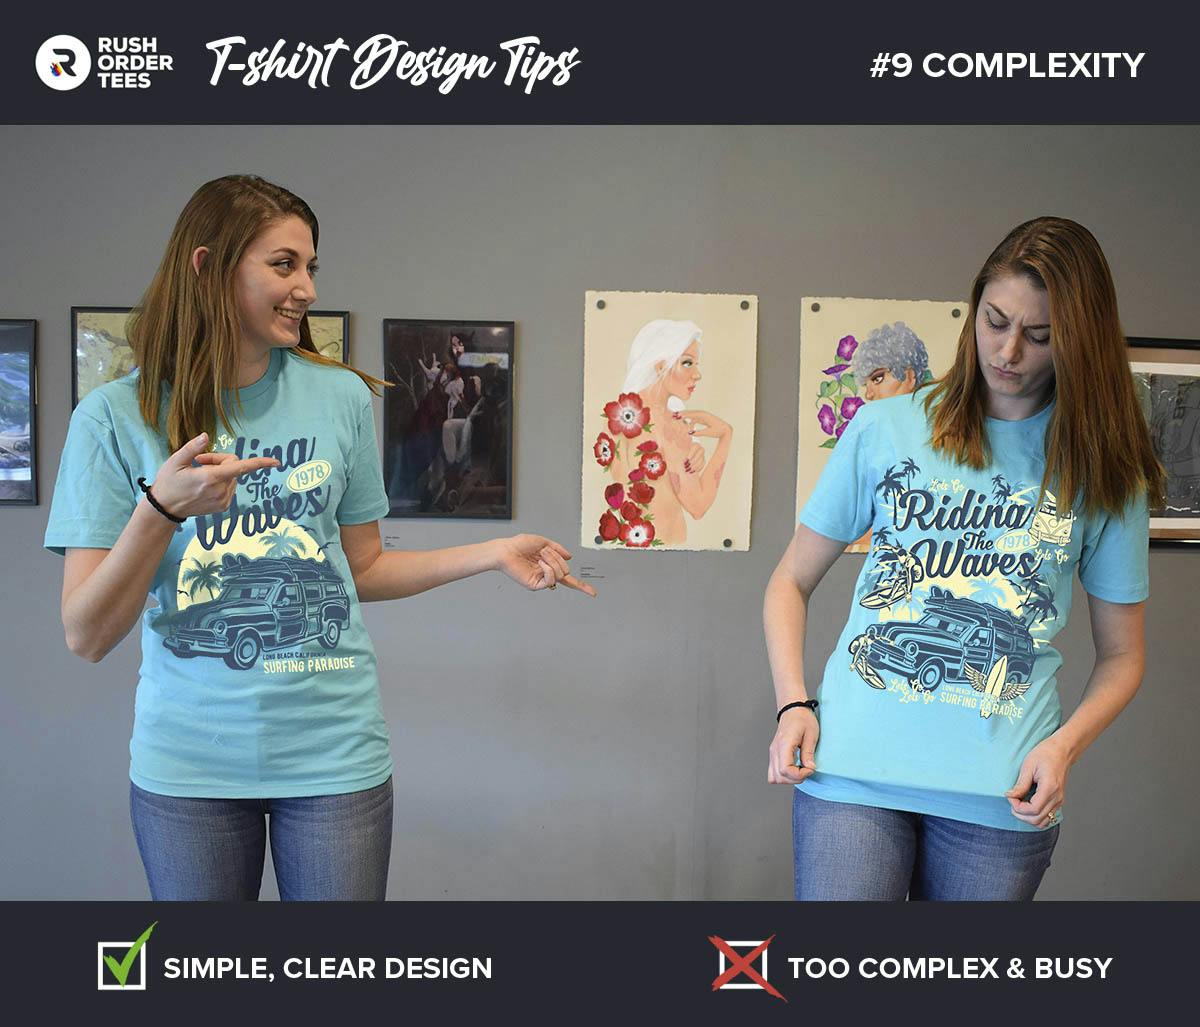 Gradient T Shirt Designs Graphics & More Merch